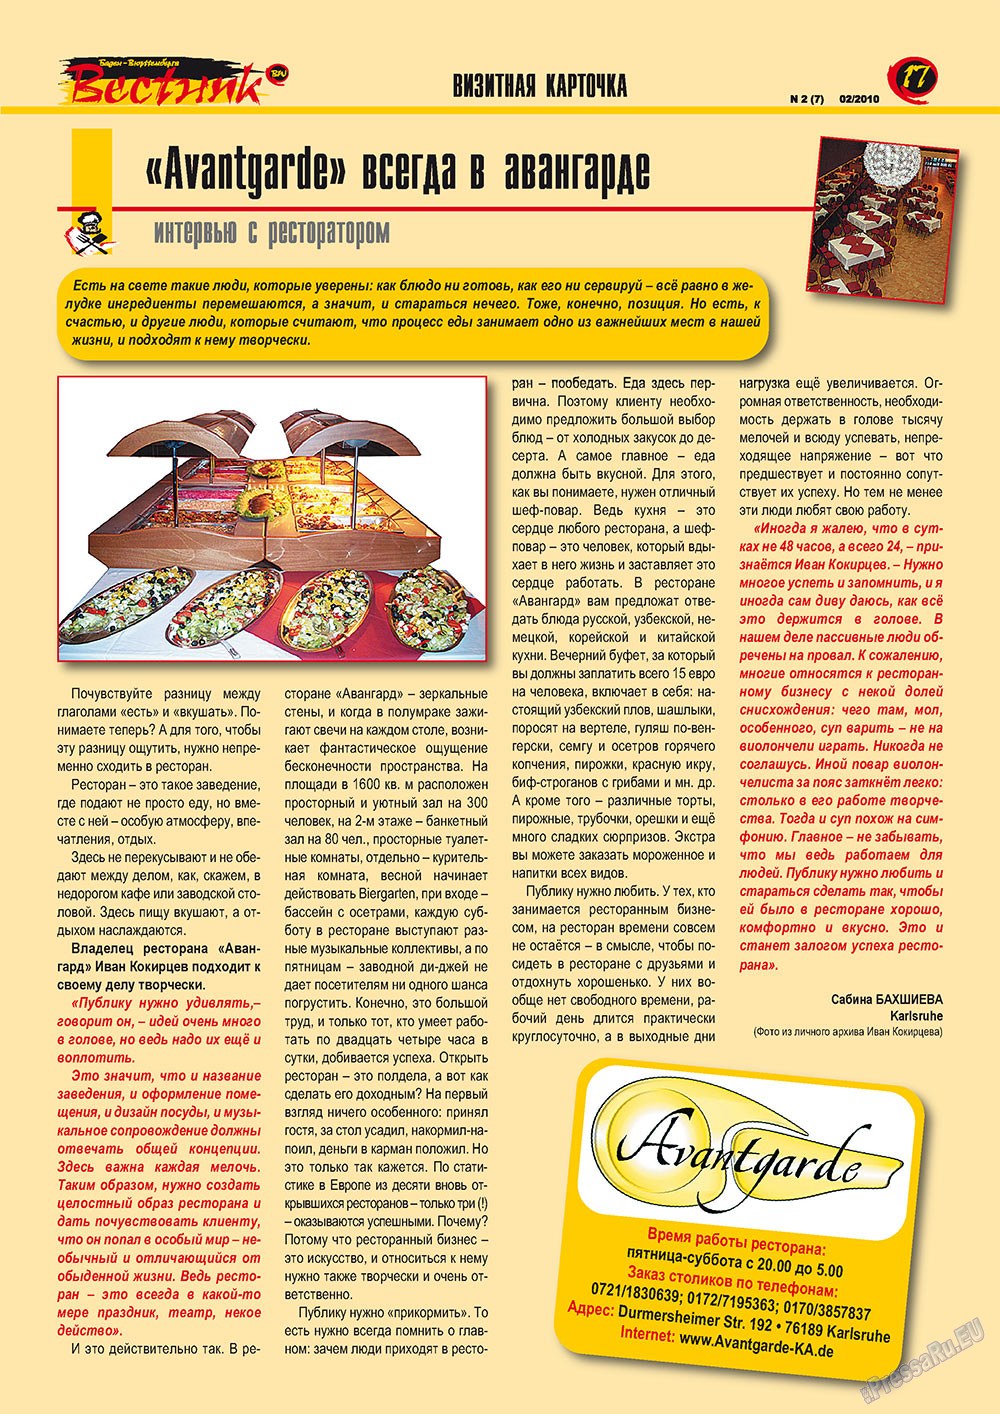 Вестник-info (журнал). 2010 год, номер 2, стр. 17